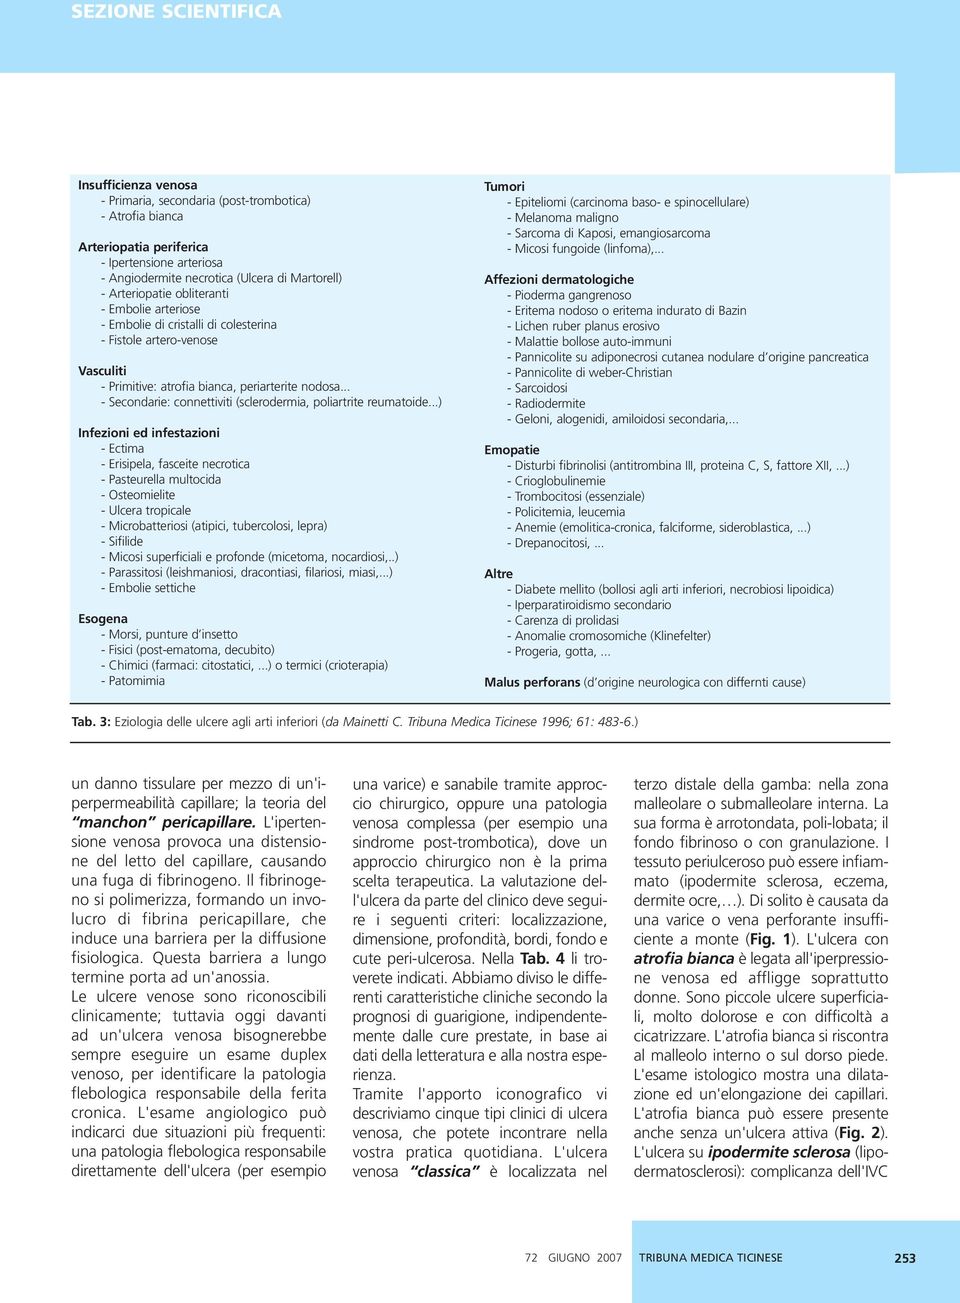 .. - Secondarie: connettiviti (sclerodermia, poliartrite reumatoide.